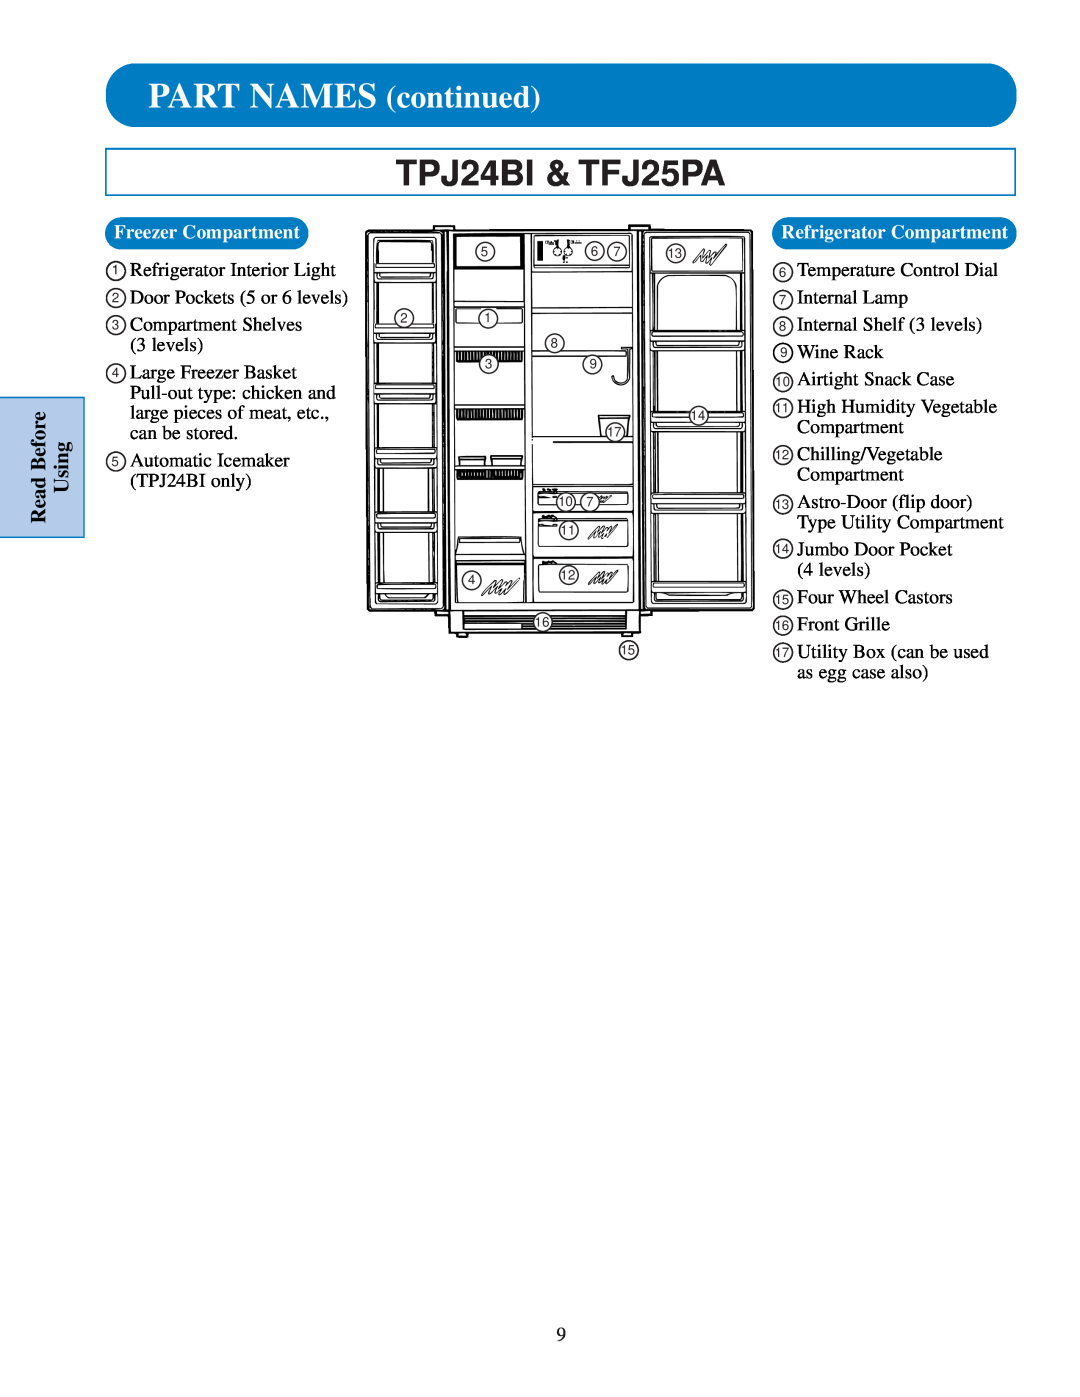 GE TFJ22JA PART NAMES continued, TPJ24BI & TFJ25PA, Read Before Using, Freezer Compartment, Refrigerator Compartment 